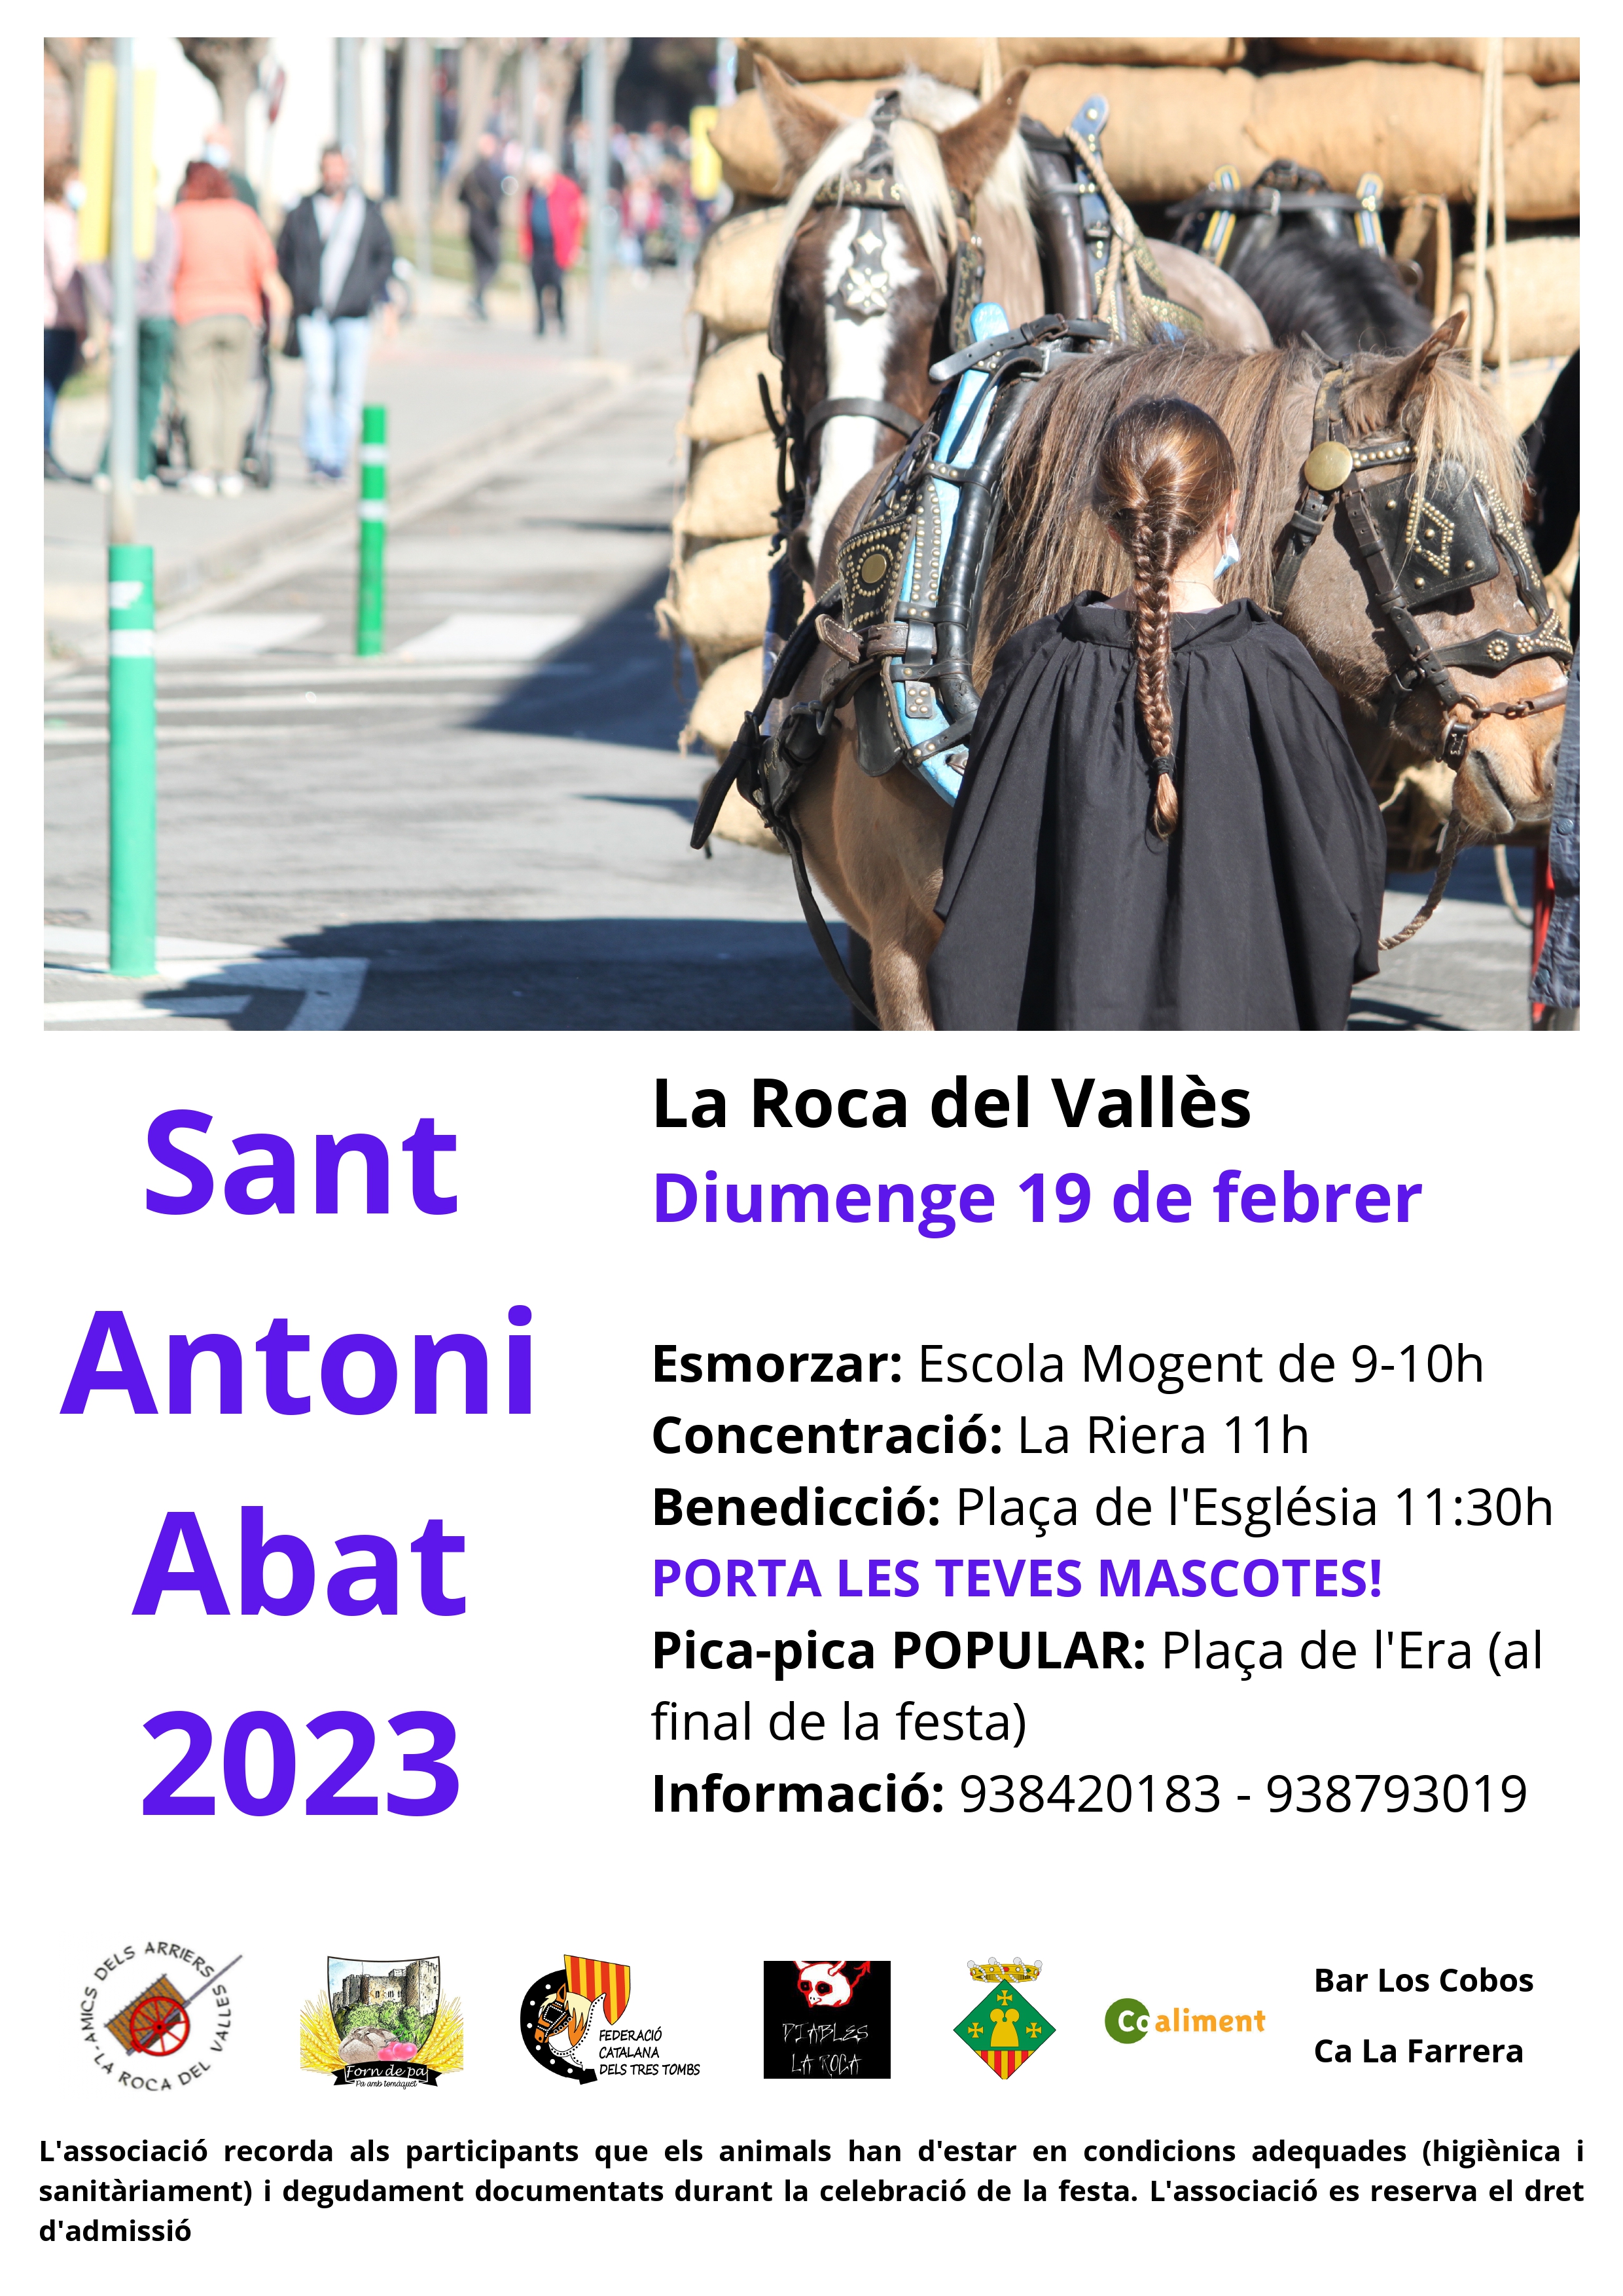 Sant Antoni Abat 2023